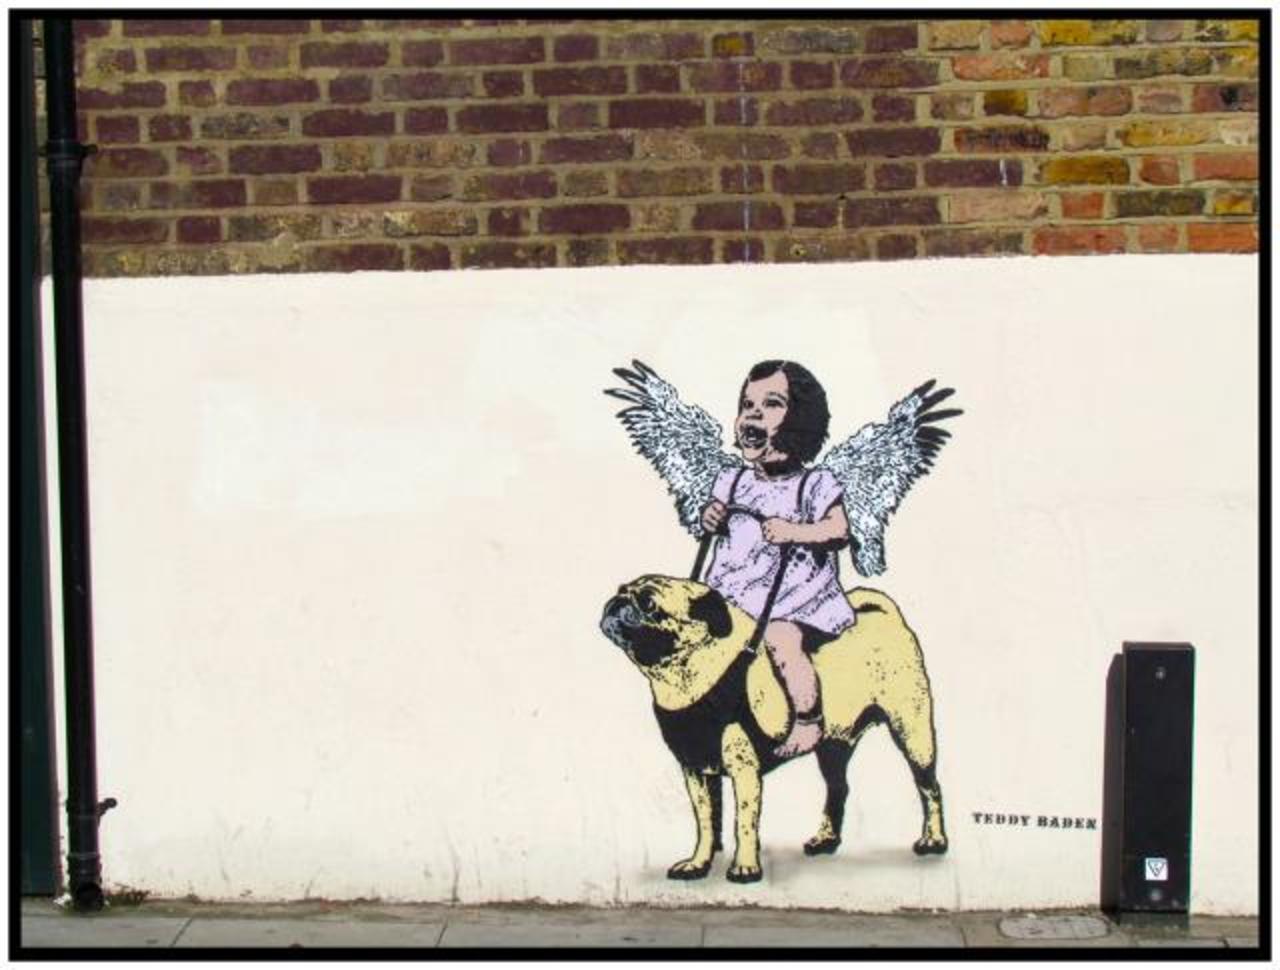 RT @DanielGennaoui: Pugs might fly'.. see more of Teddy Baden here: http://bit.ly/1vyD8s1 #streetart #graffiti http://t.co/HrPyvRkiLf